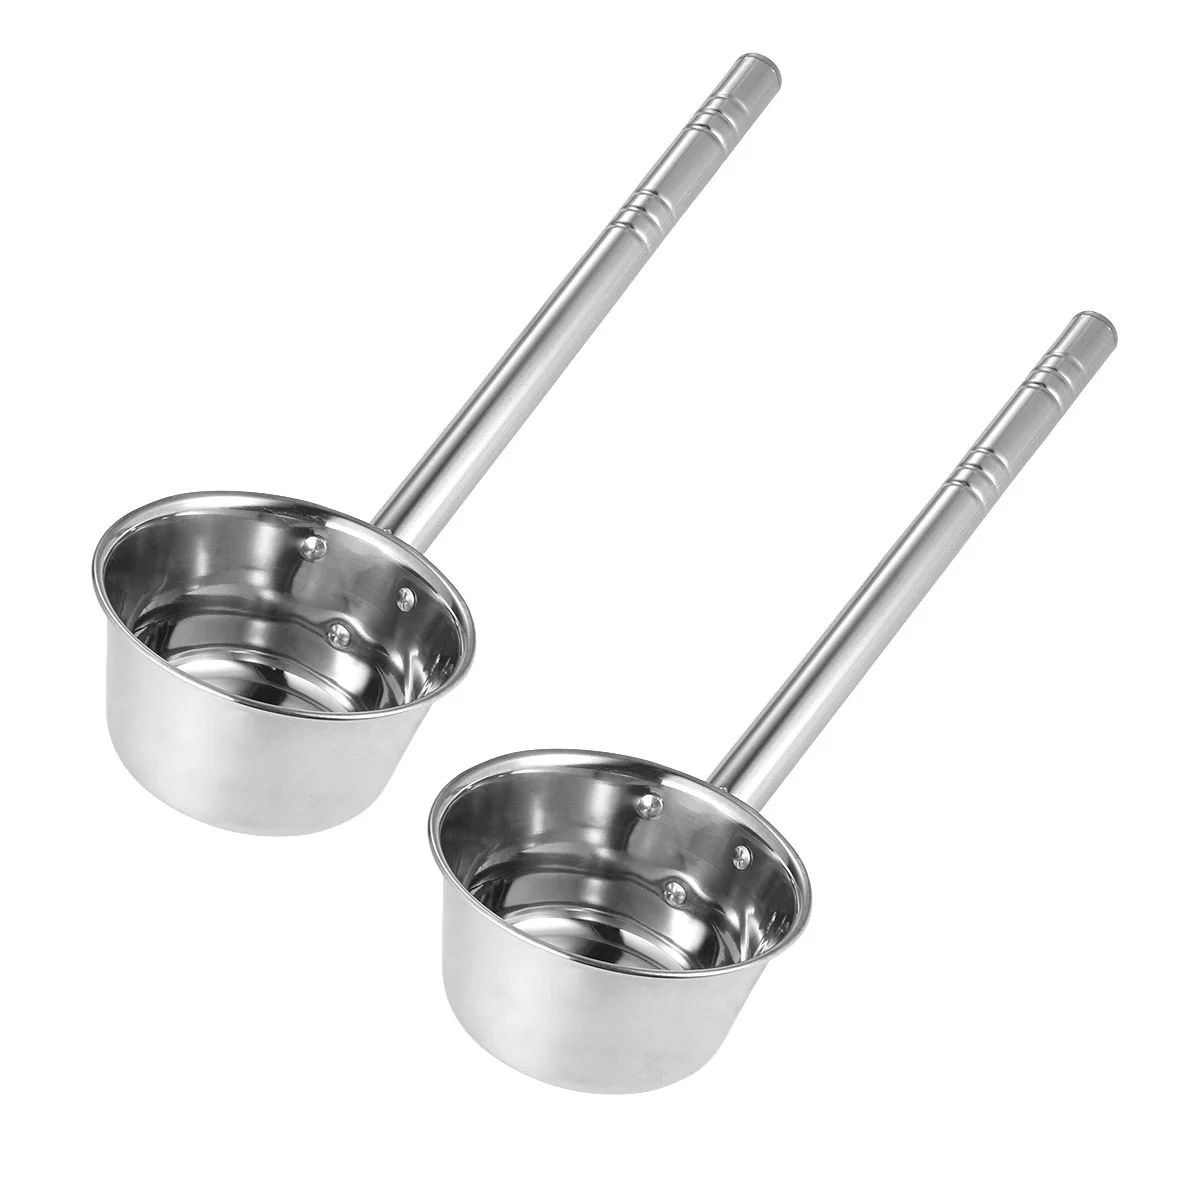 

Ladle Water Scoop Stainless Steel Dipper Cup Kitchen Metal Soup Handle Shampoo Hair Spoon Washing Cooking Rinse Bath Bathroom